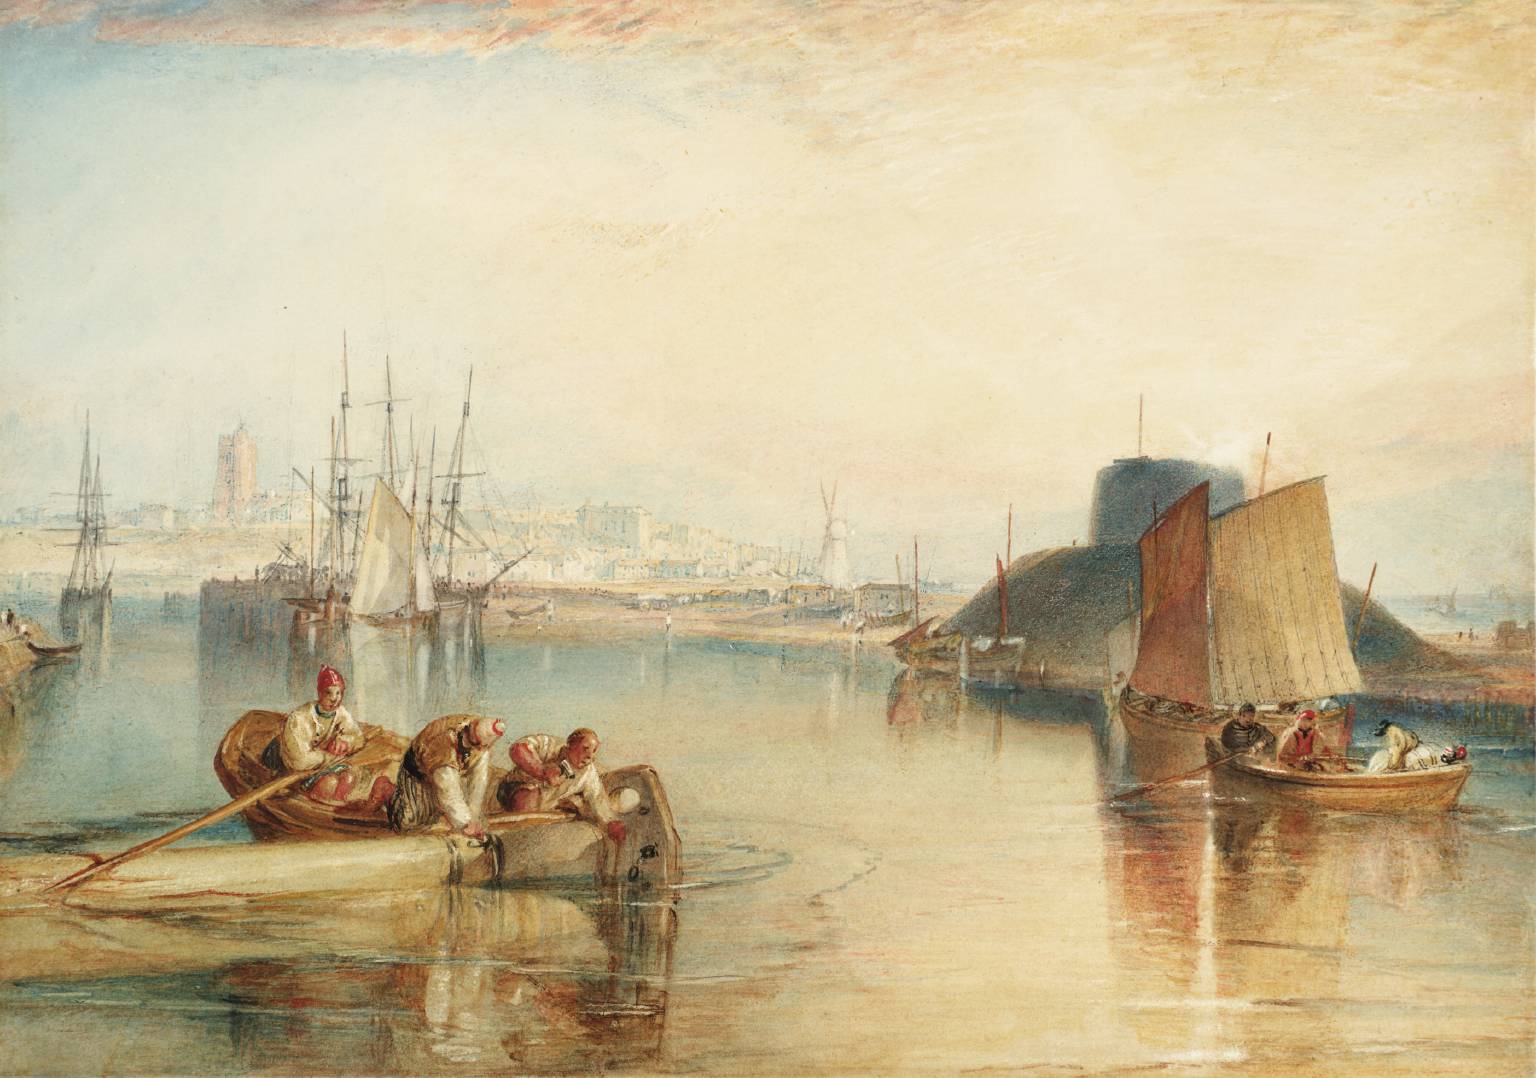 Дж тернер. Уильям Тернер (1775-1851). Вильям Тернер художник.